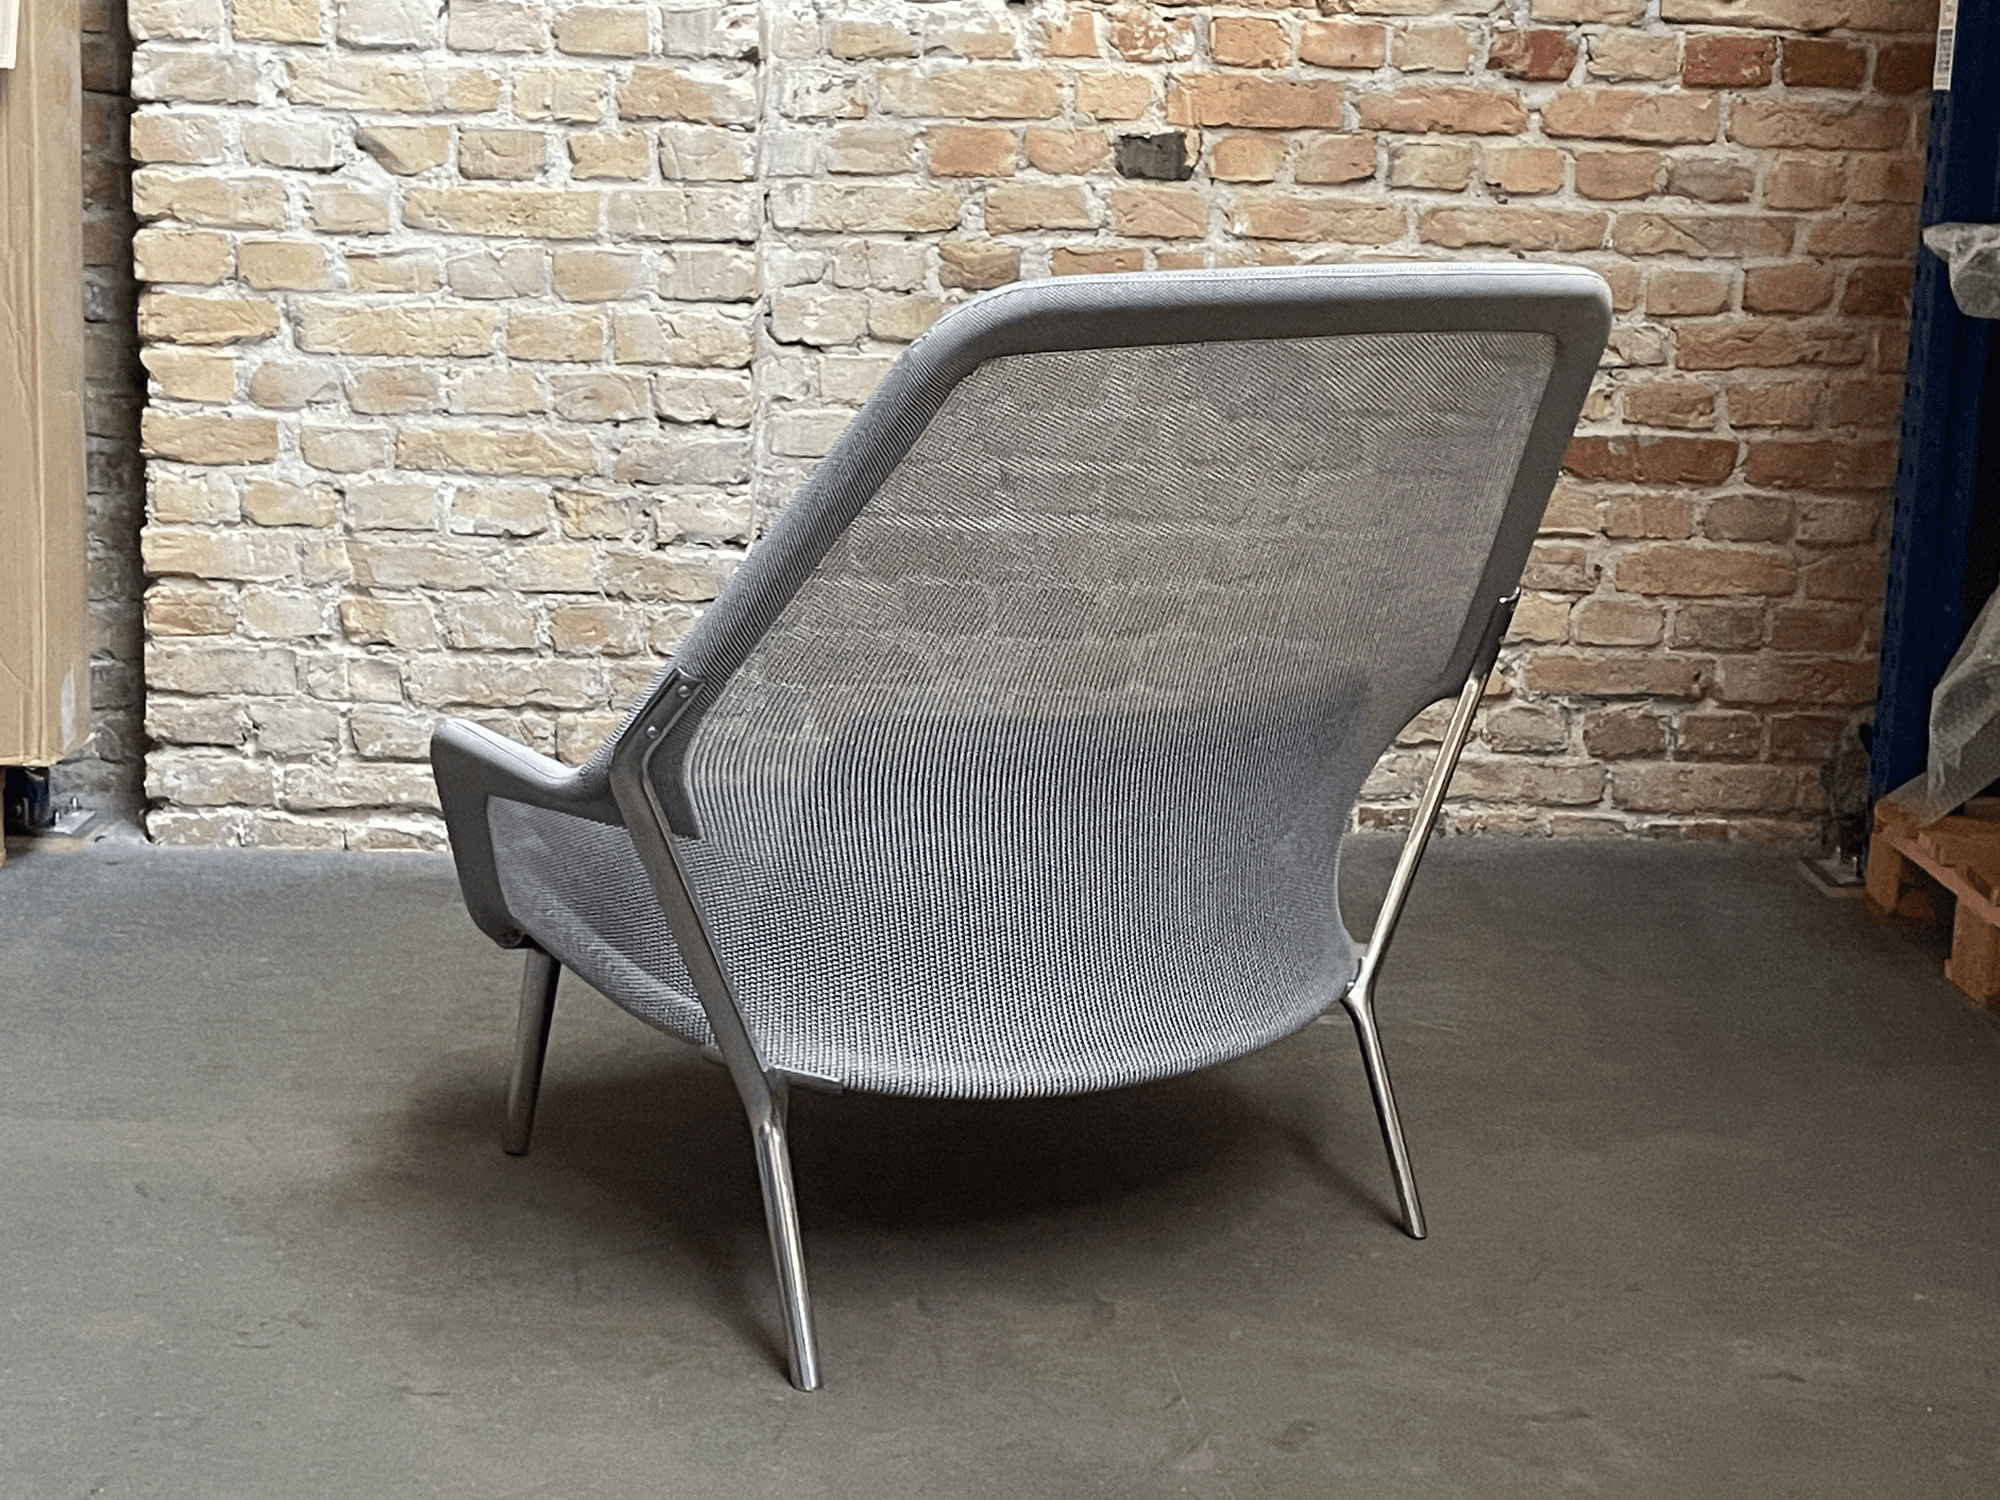 vitra-sessel-slow-chair-bezug-tricot-braun-creme-gestell-aluminium-poliert-mf-0008205-001-4